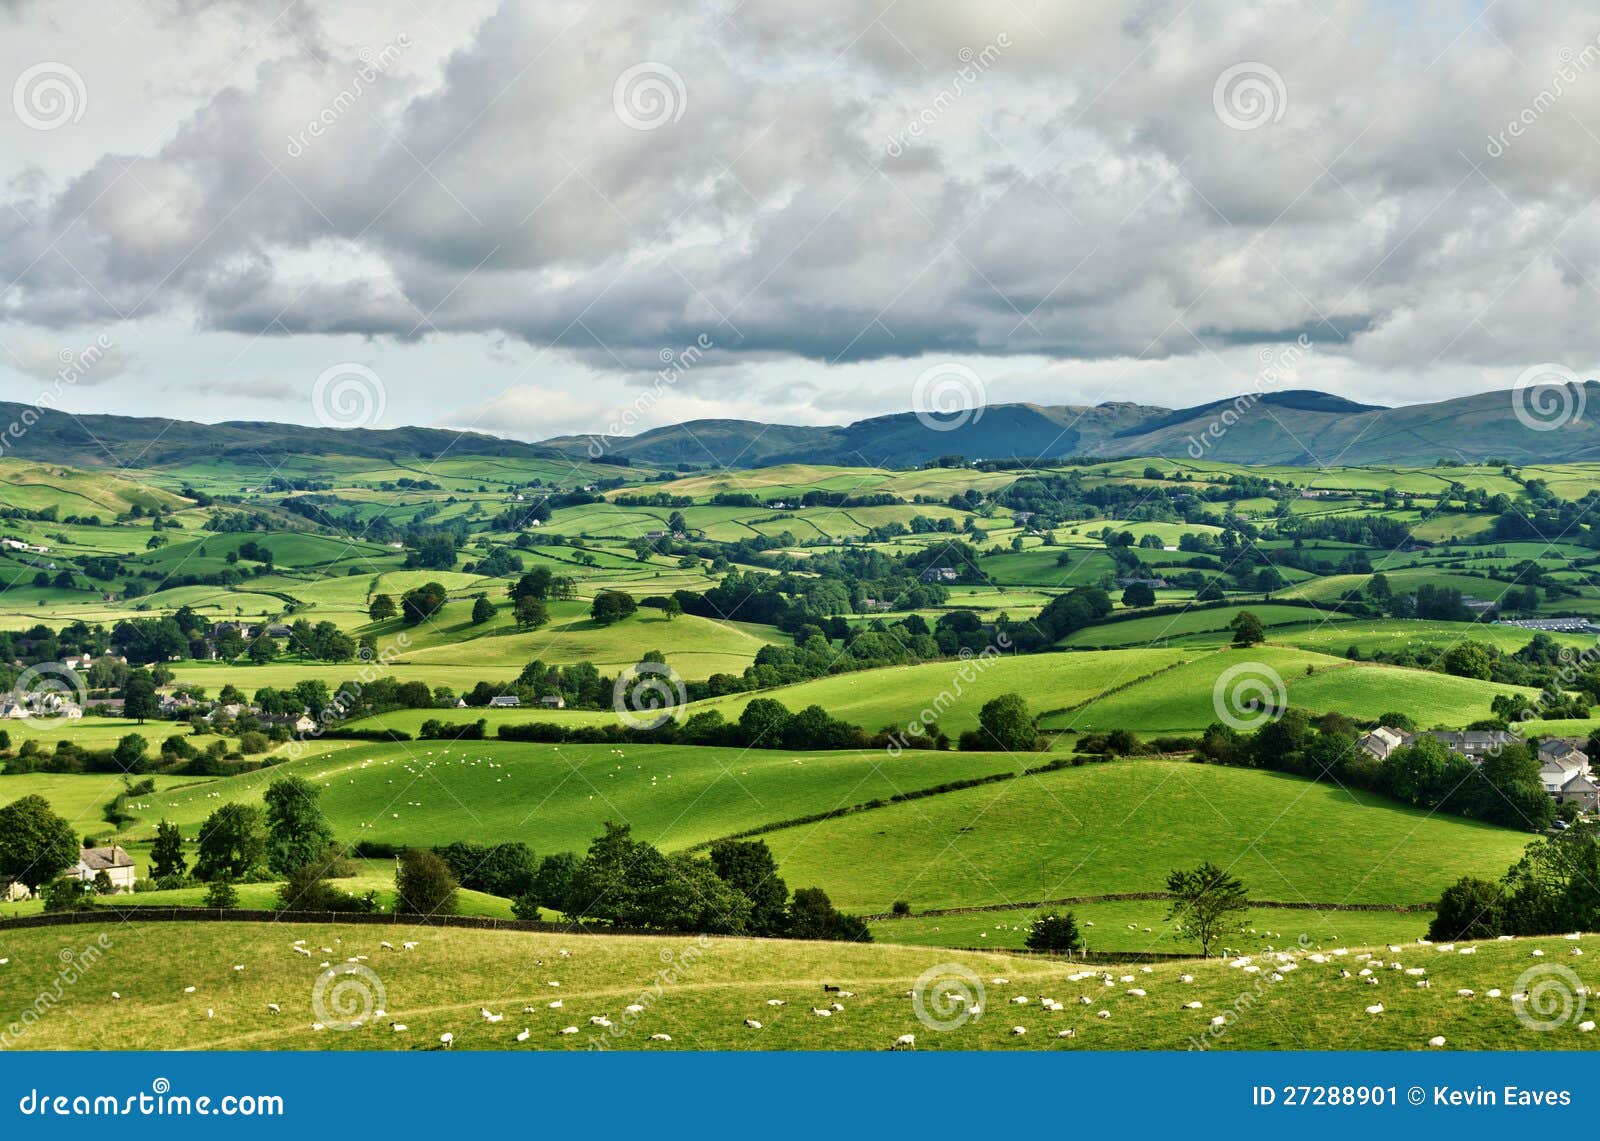 pastoral scene of lush green english farmland